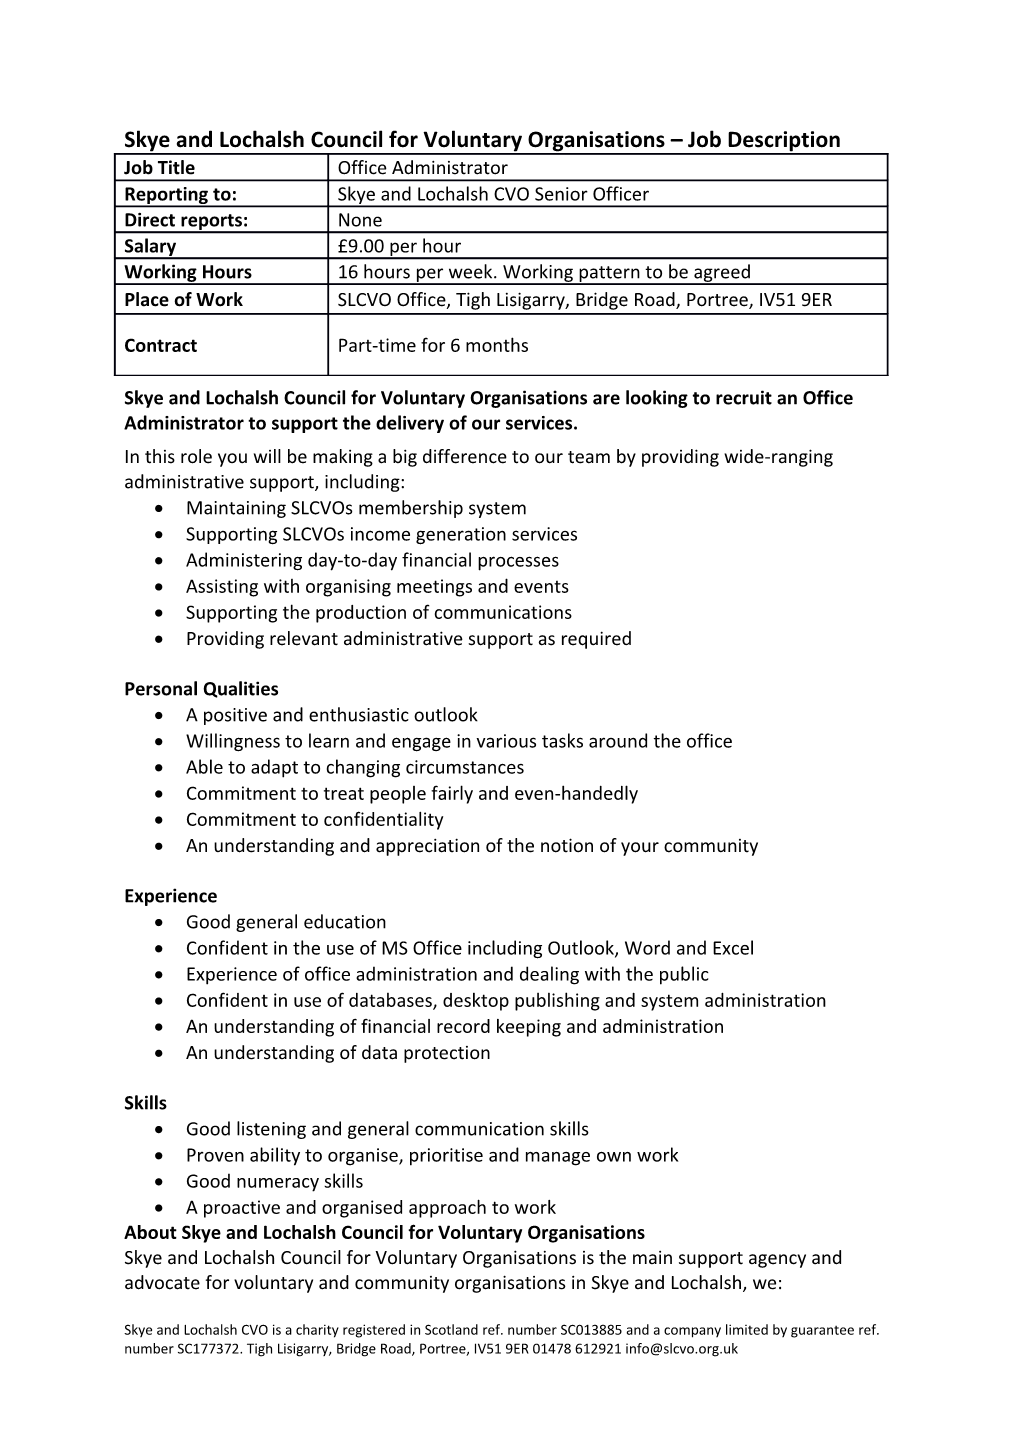 Skye and Lochalsh Council for Voluntary Organisations Job Description